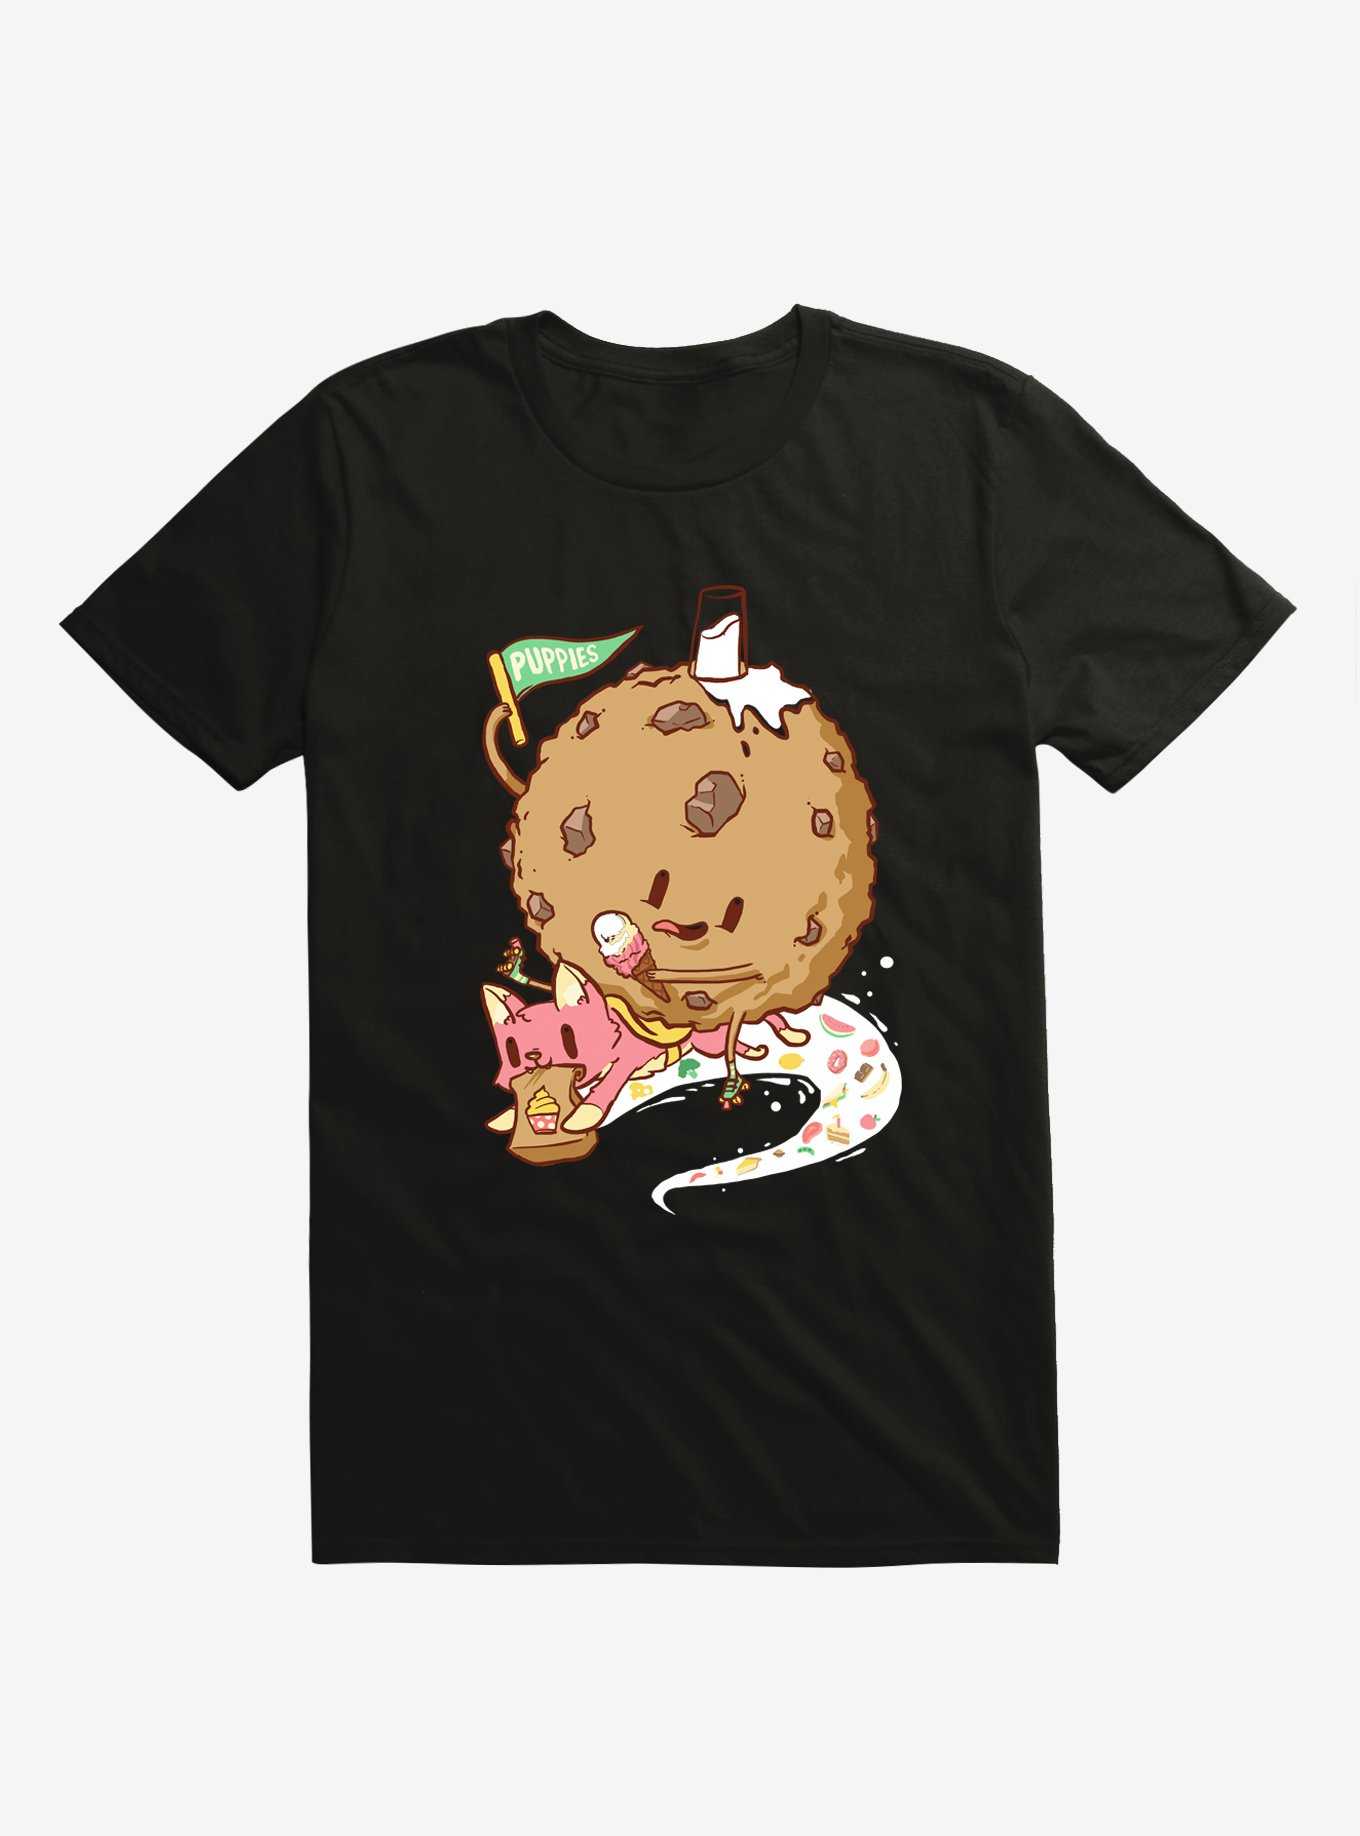 Cake Delivery Cat Black T-Shirt, , hi-res